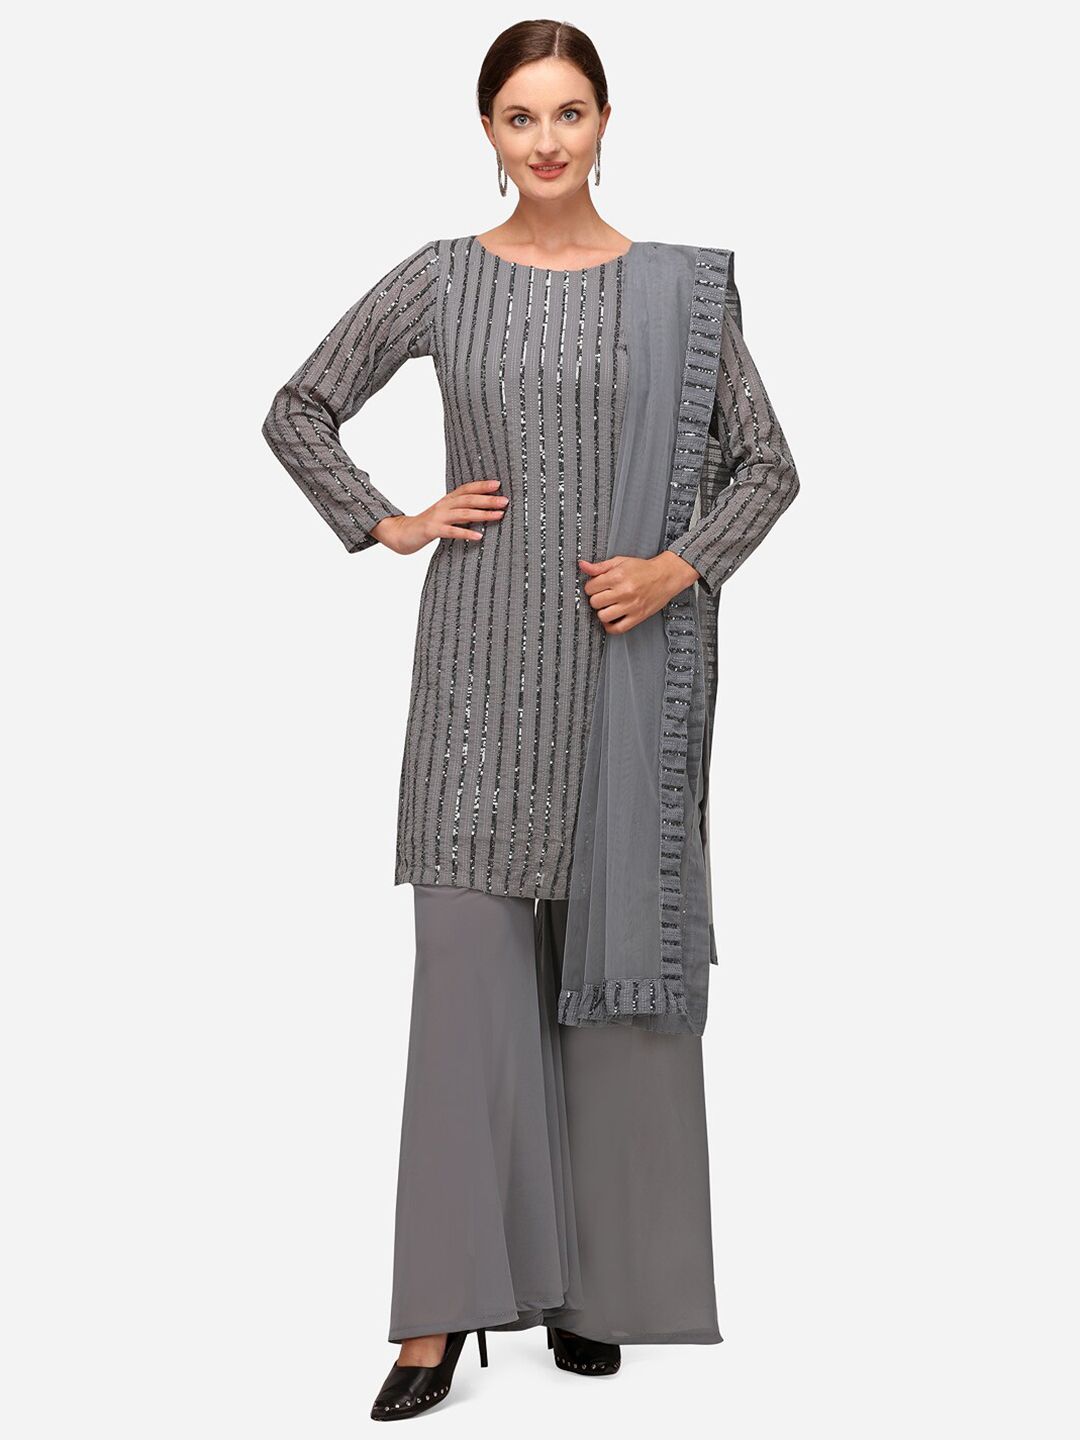 JATRIQQ Grey Embroidered Semi-Stitched Dress Material Price in India